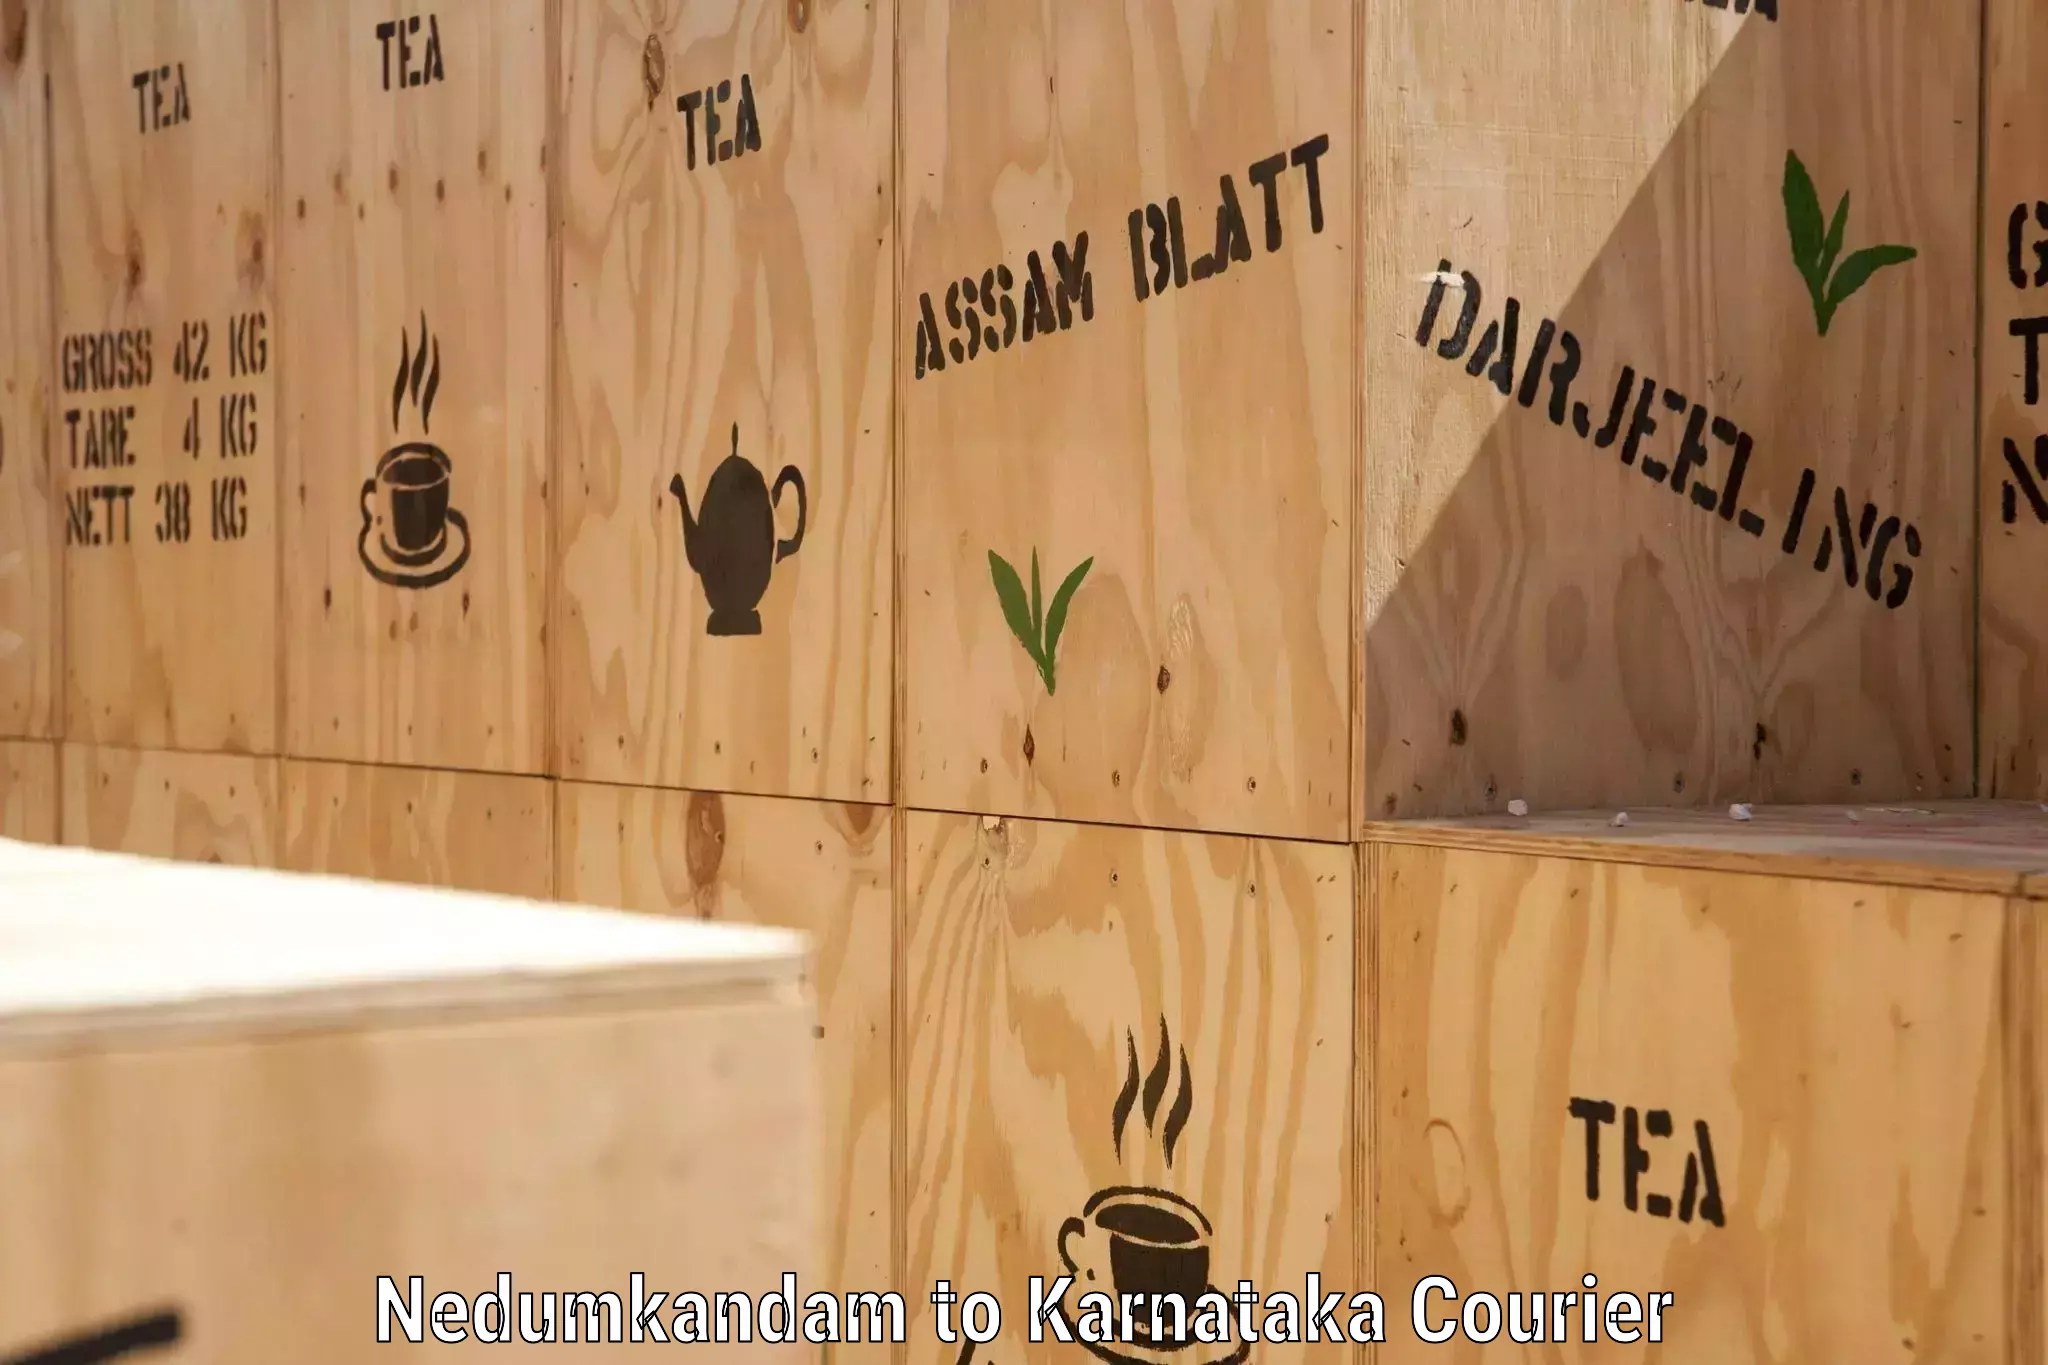 State-of-the-art courier technology Nedumkandam to Karkala